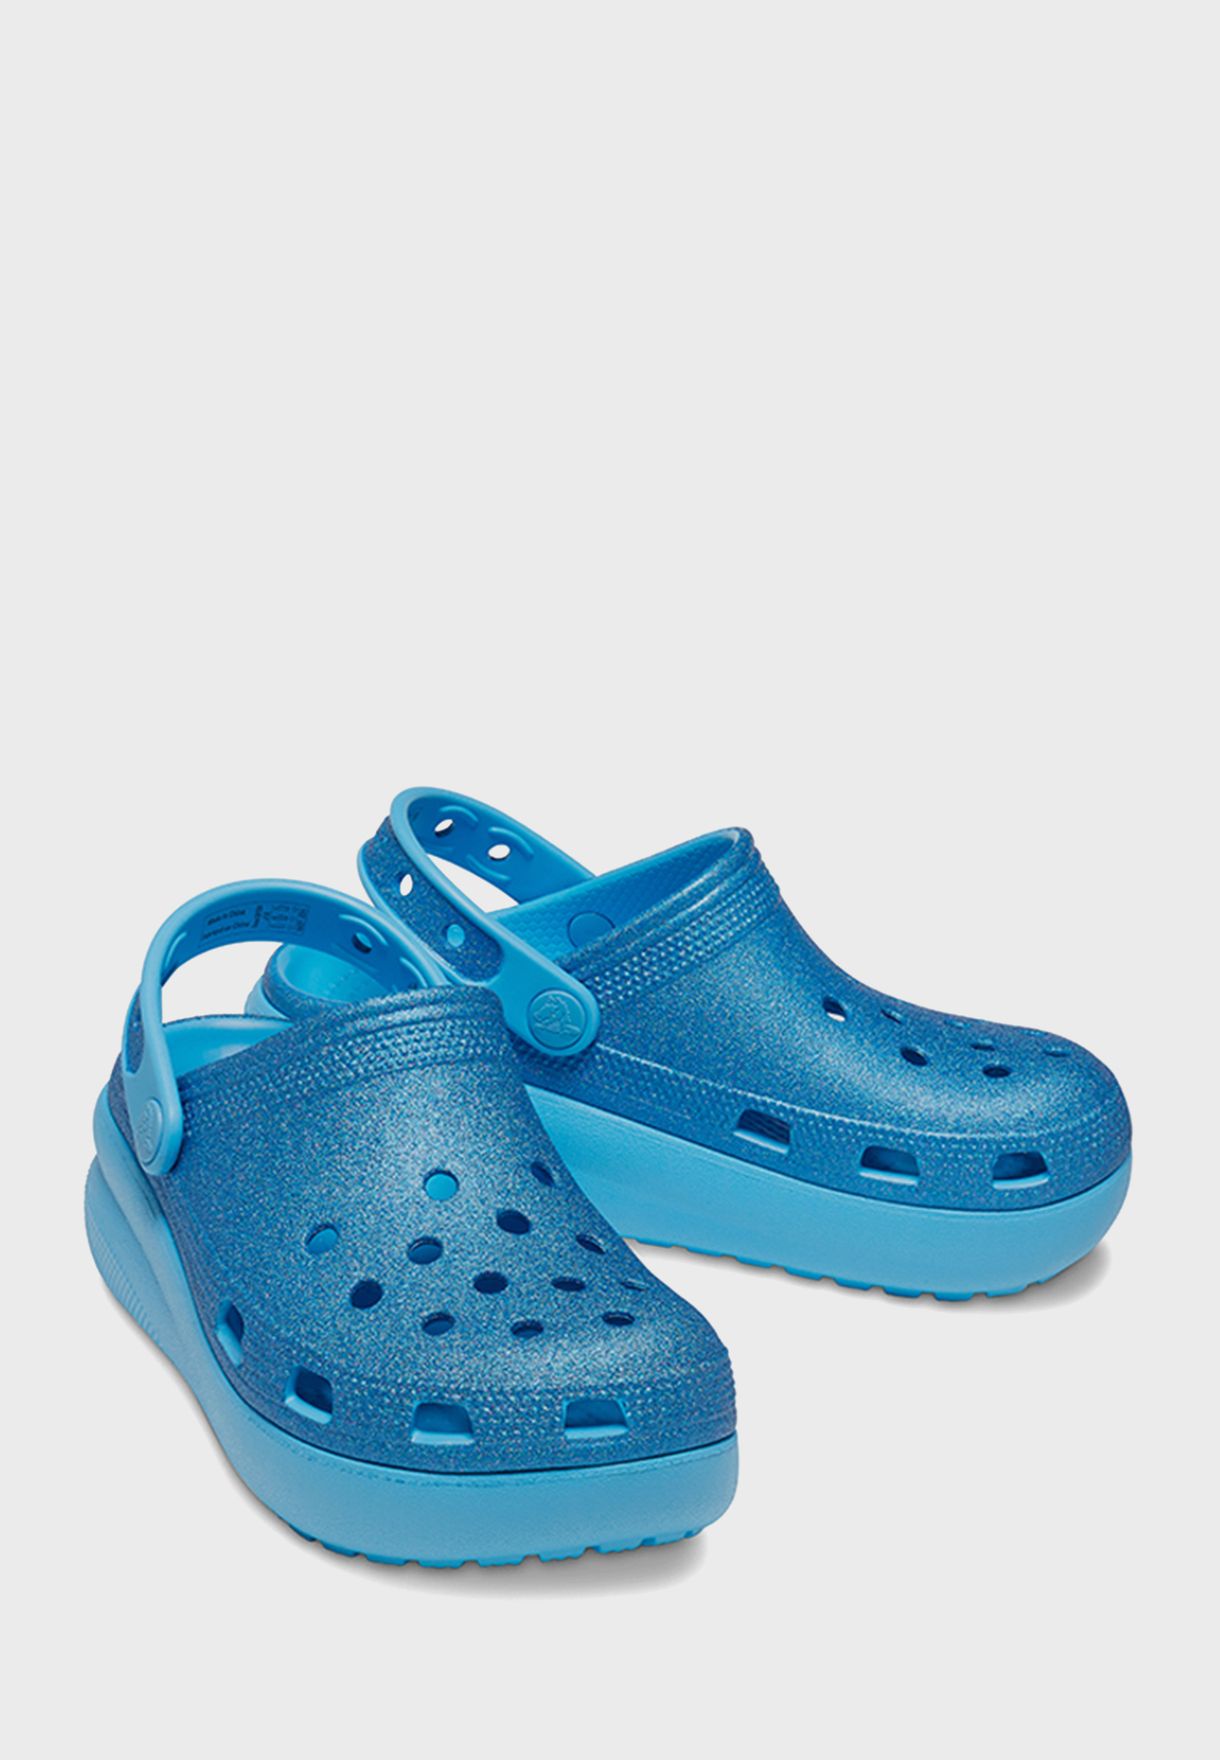 Kids Crocs Glitter Cutie Clog Sandals